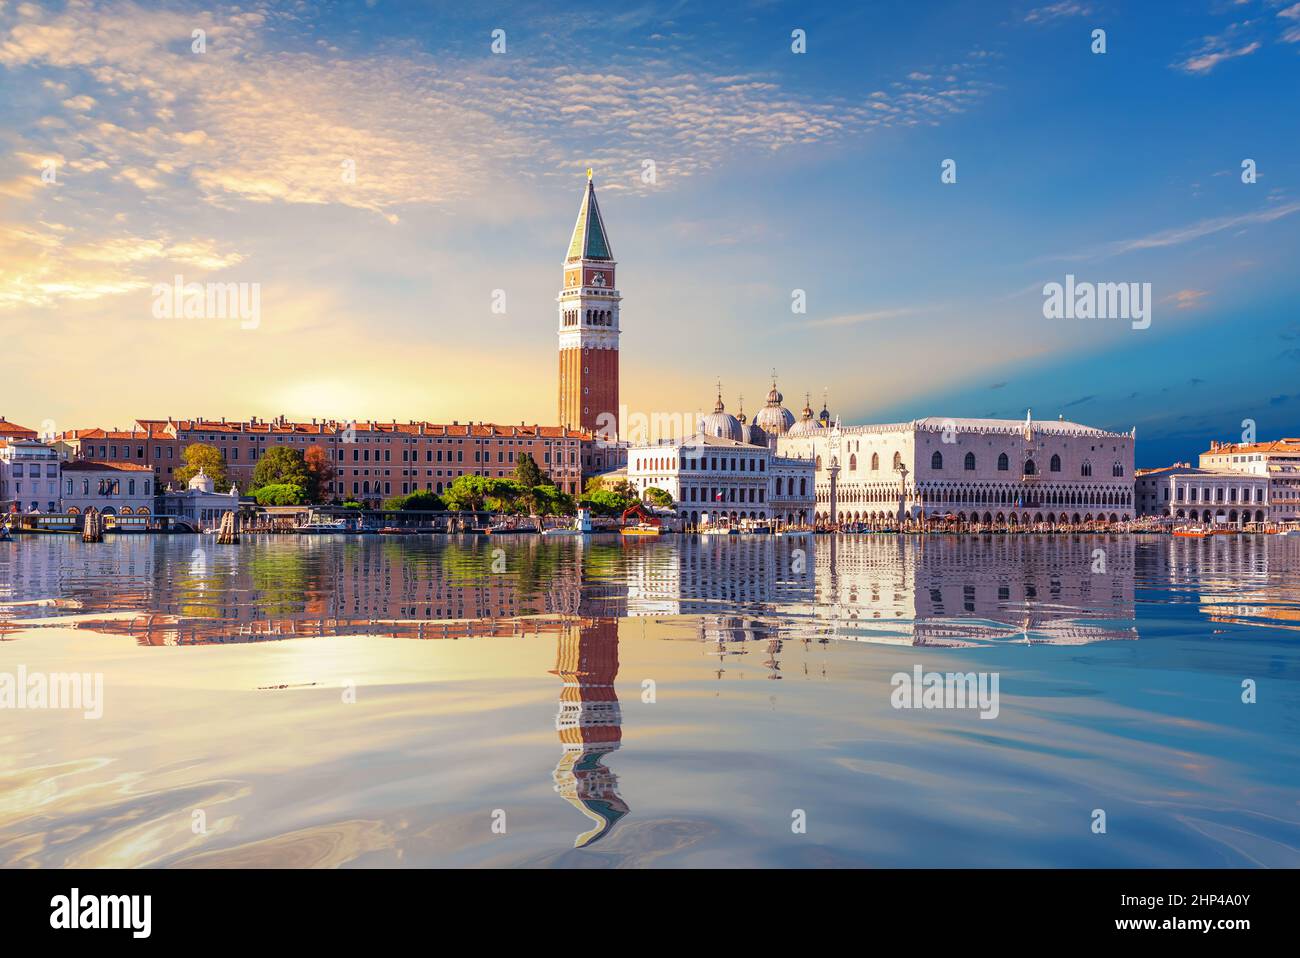 Venice main sights, view from the lagoon, Italy. Stock Photo